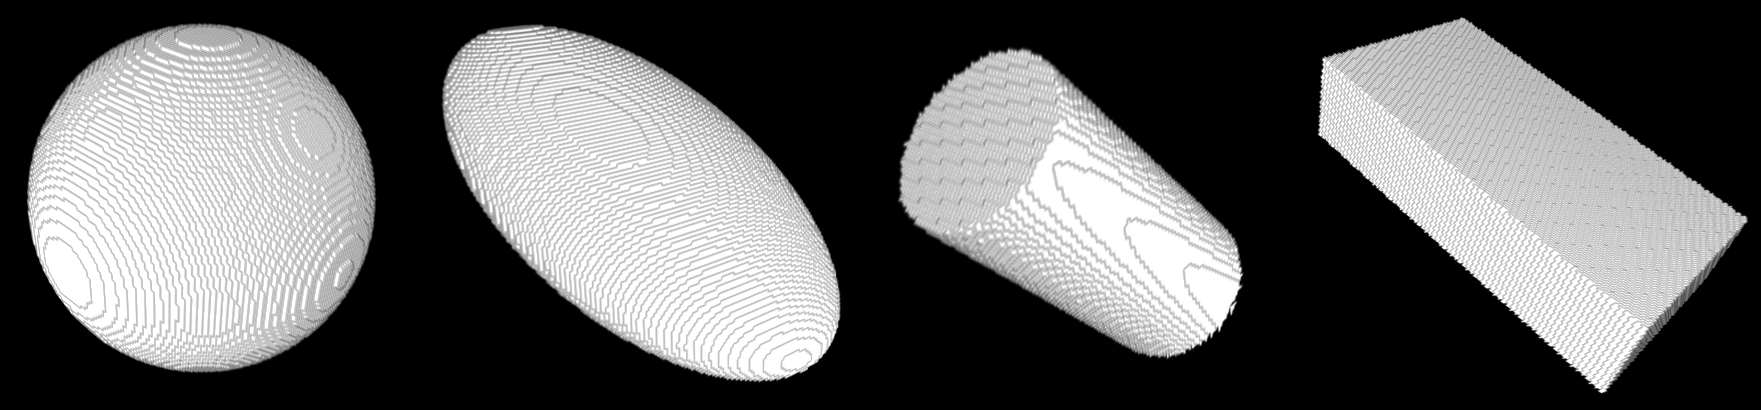 discrete 3D shapes (ball, ellipsoid, cylinder, cuboid)